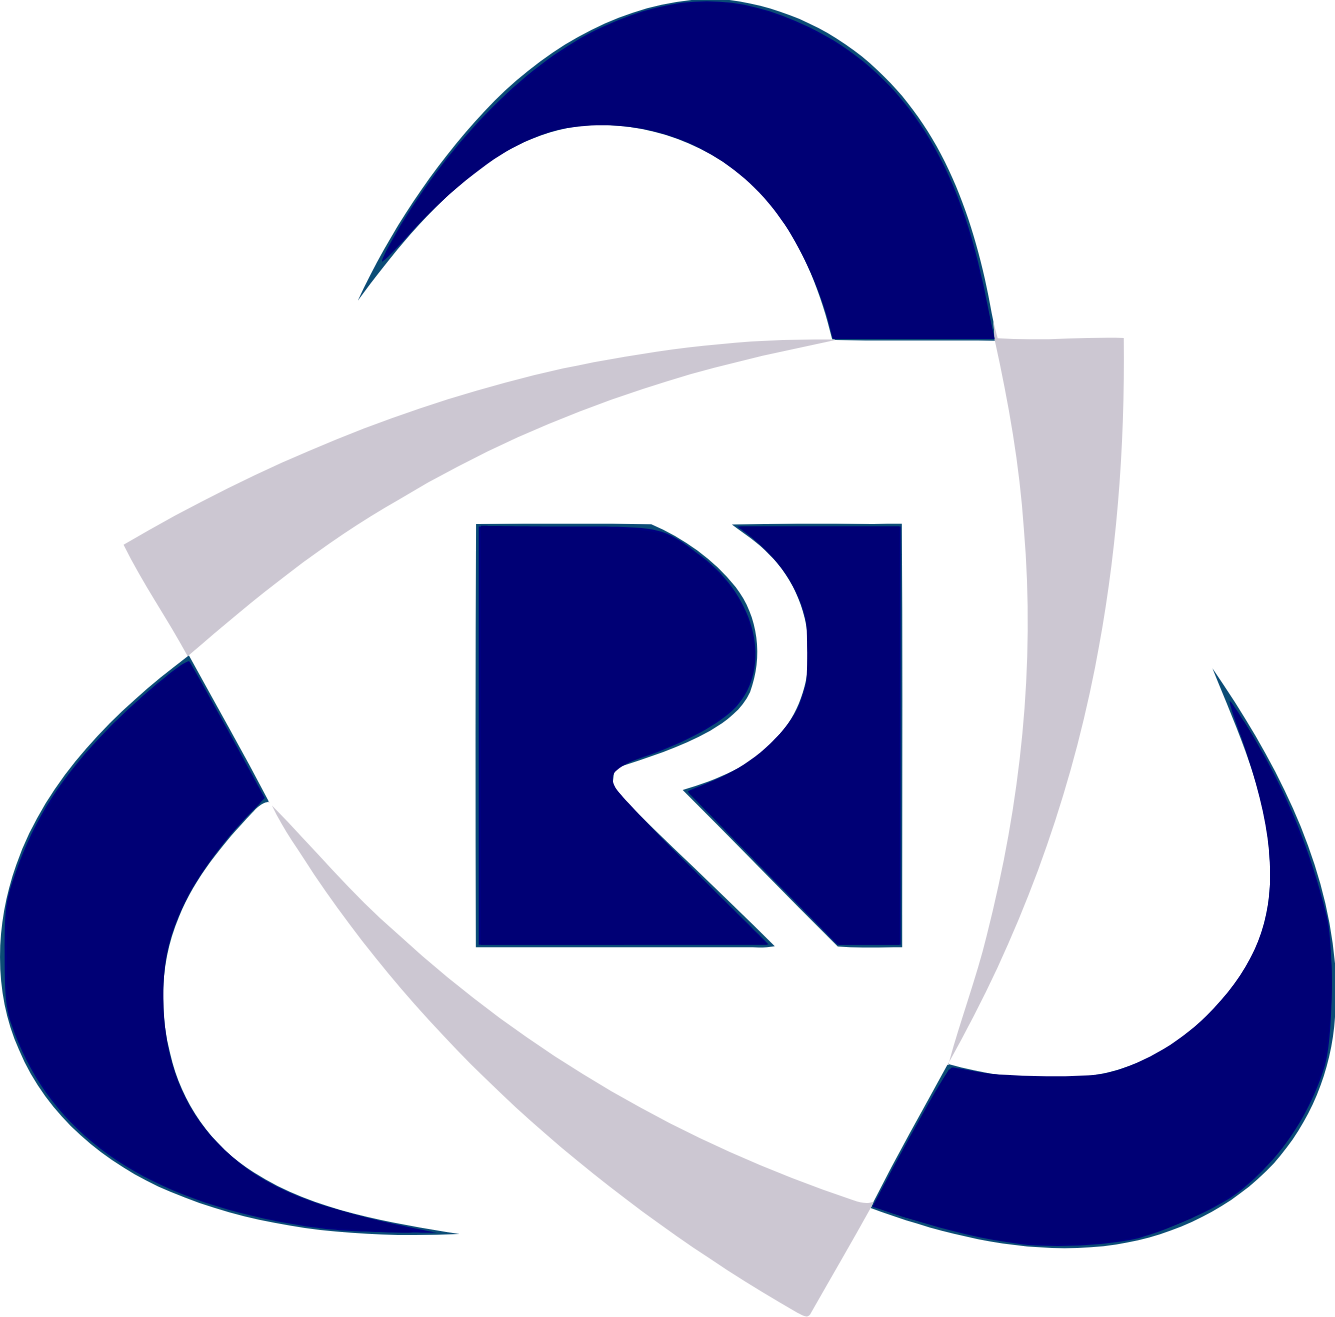 Indian Railway Catering & Tourism logo (transparent PNG)